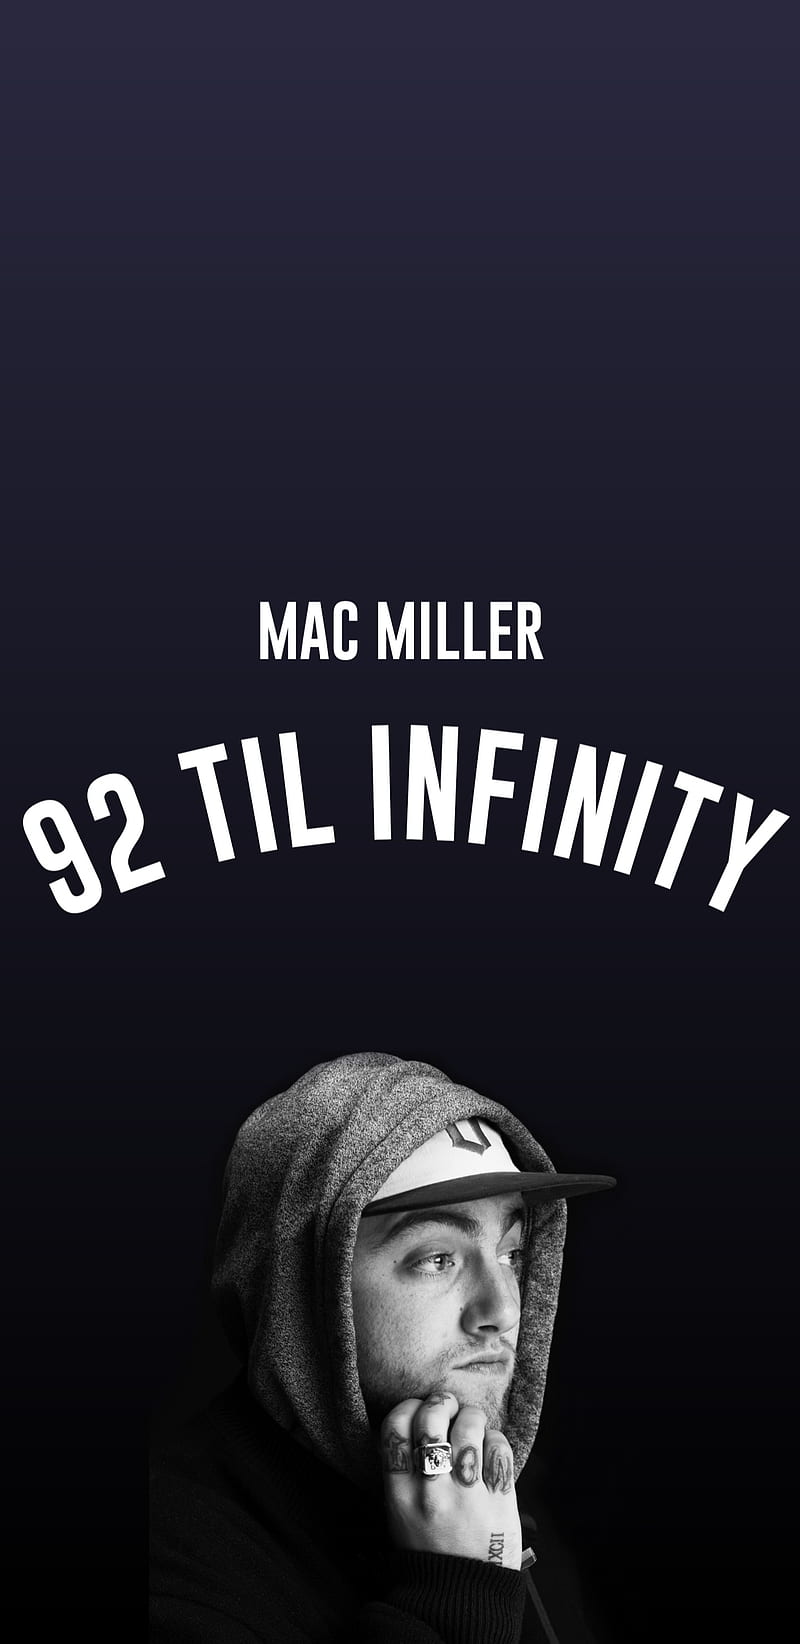 Mac Miller HD Wallpapers Free Download  PixelsTalkNet